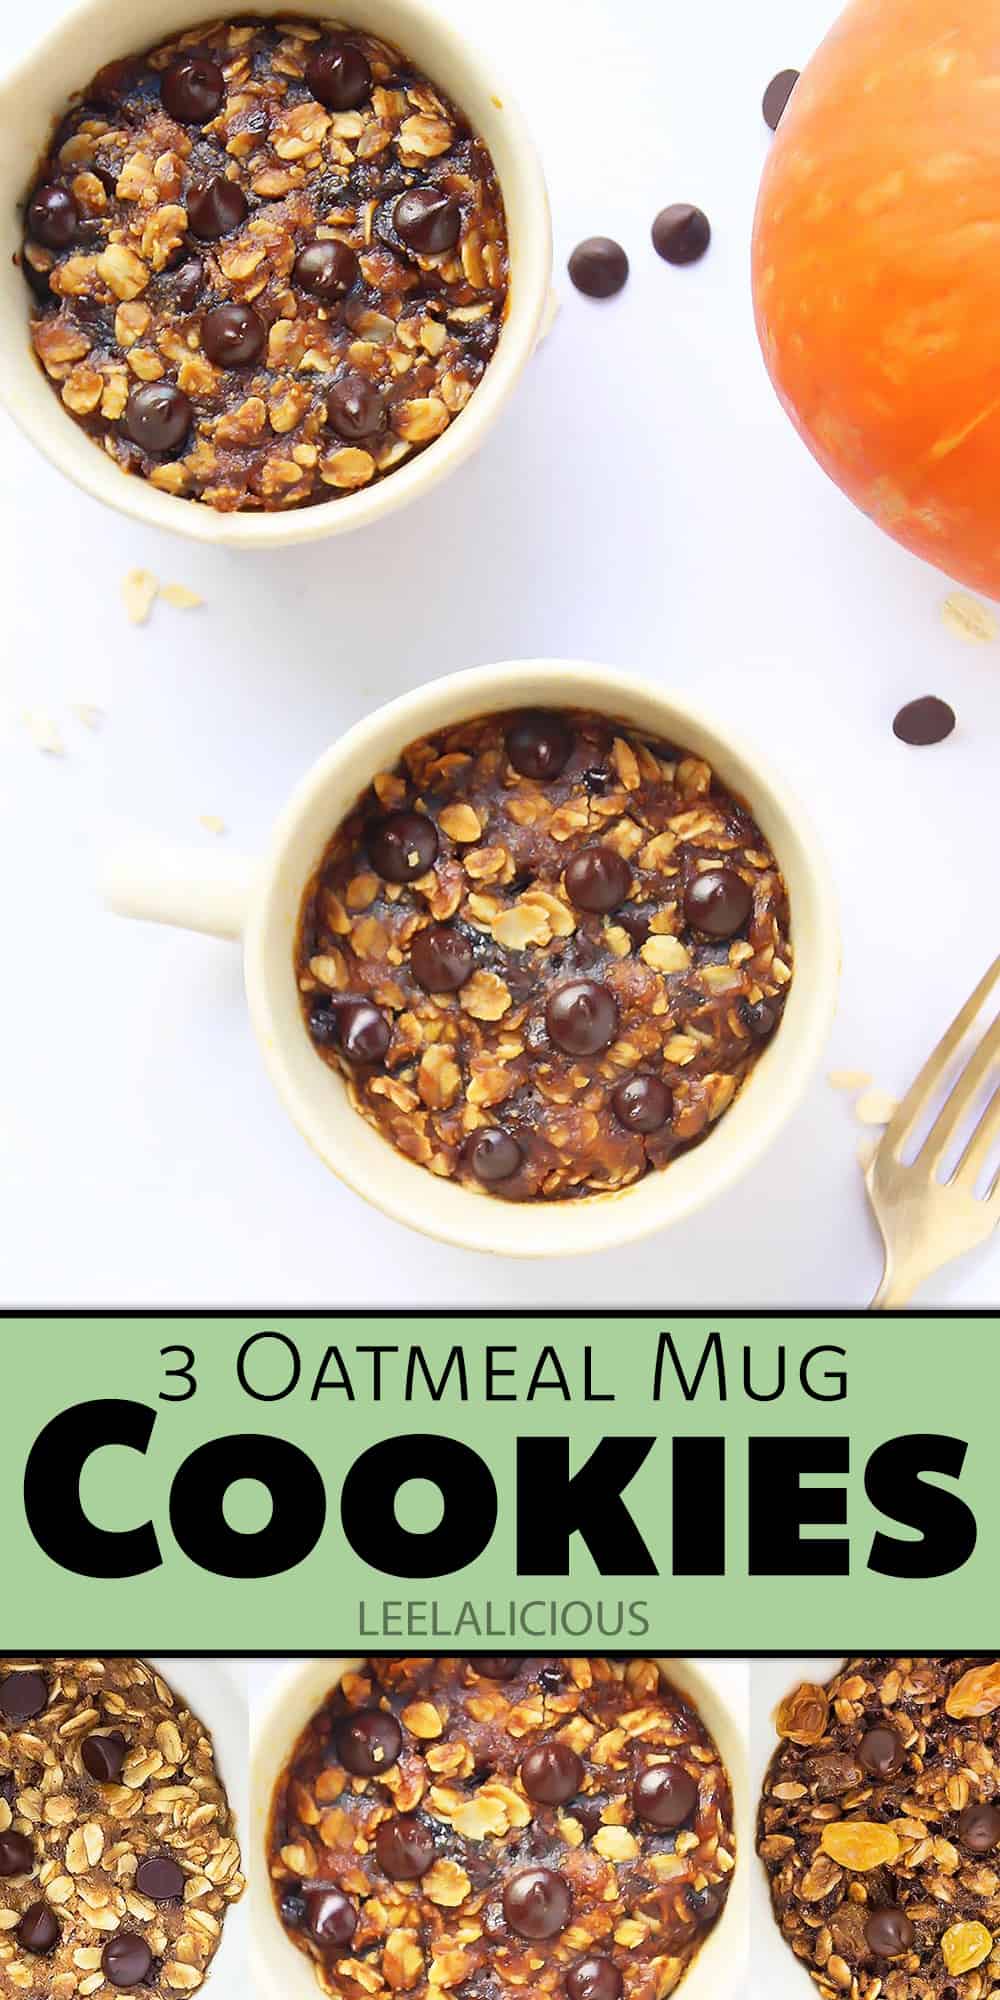 Oatmeal Mug Cookies